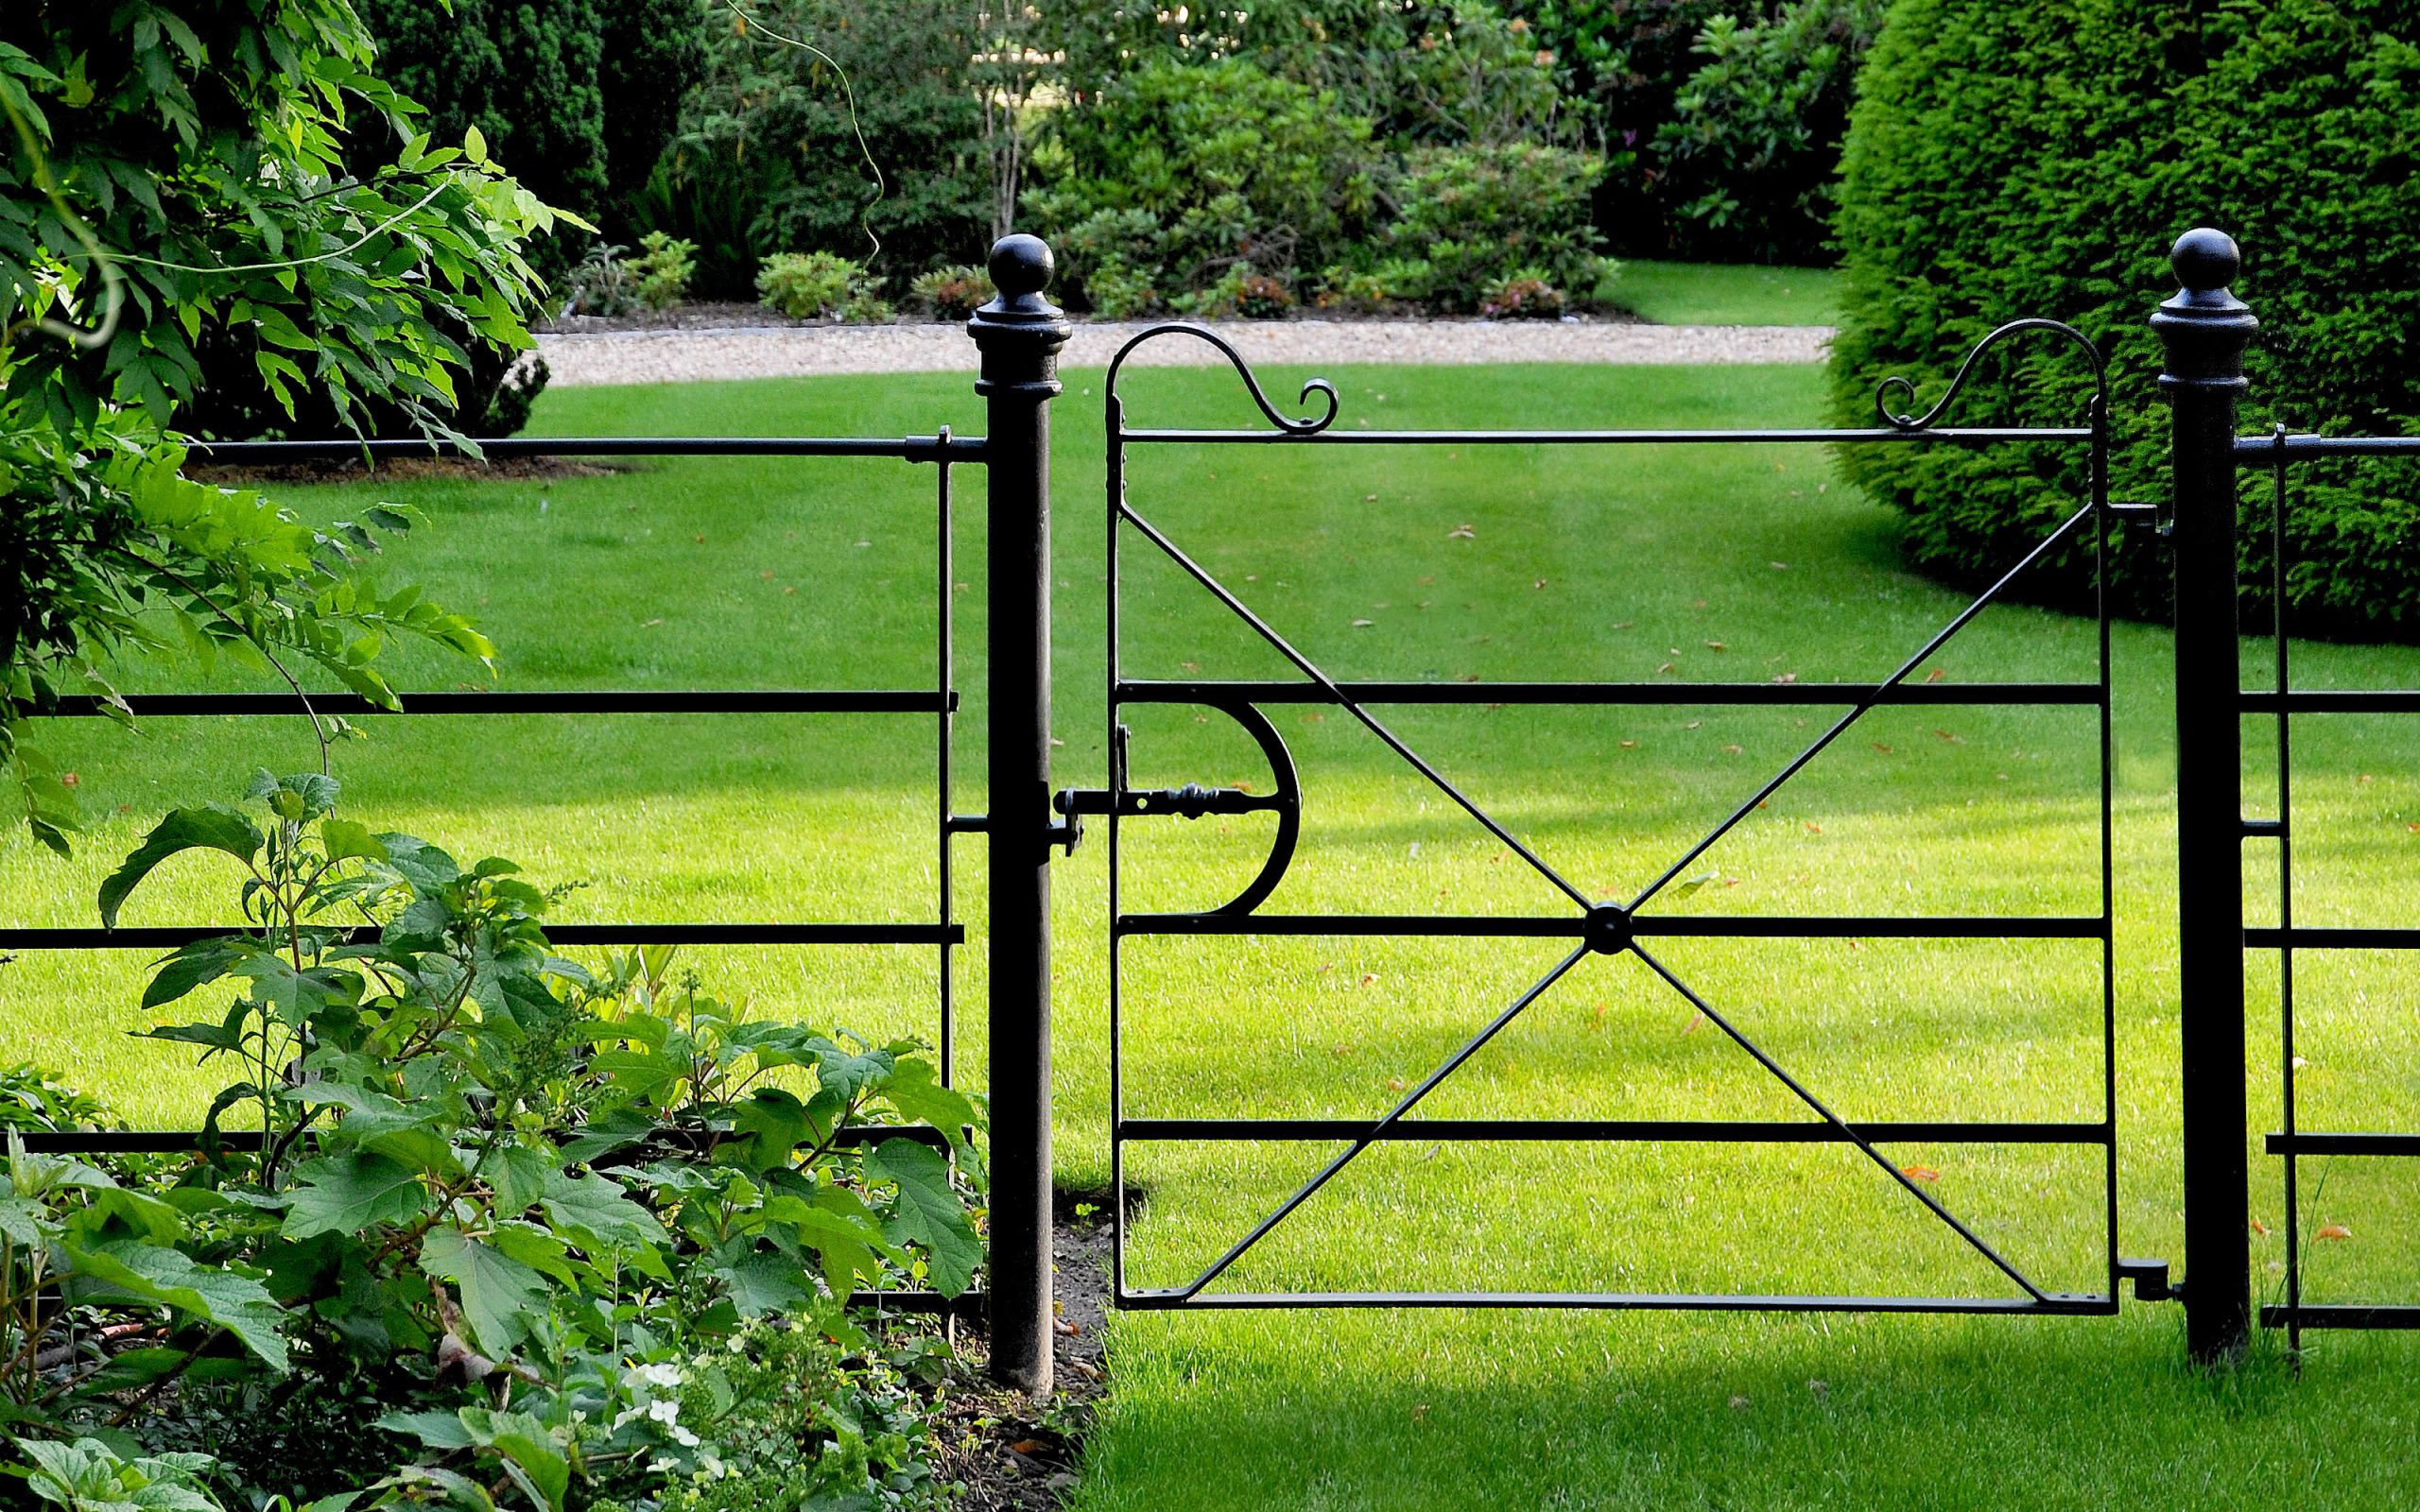 Chobham surrey country garden design iron gates